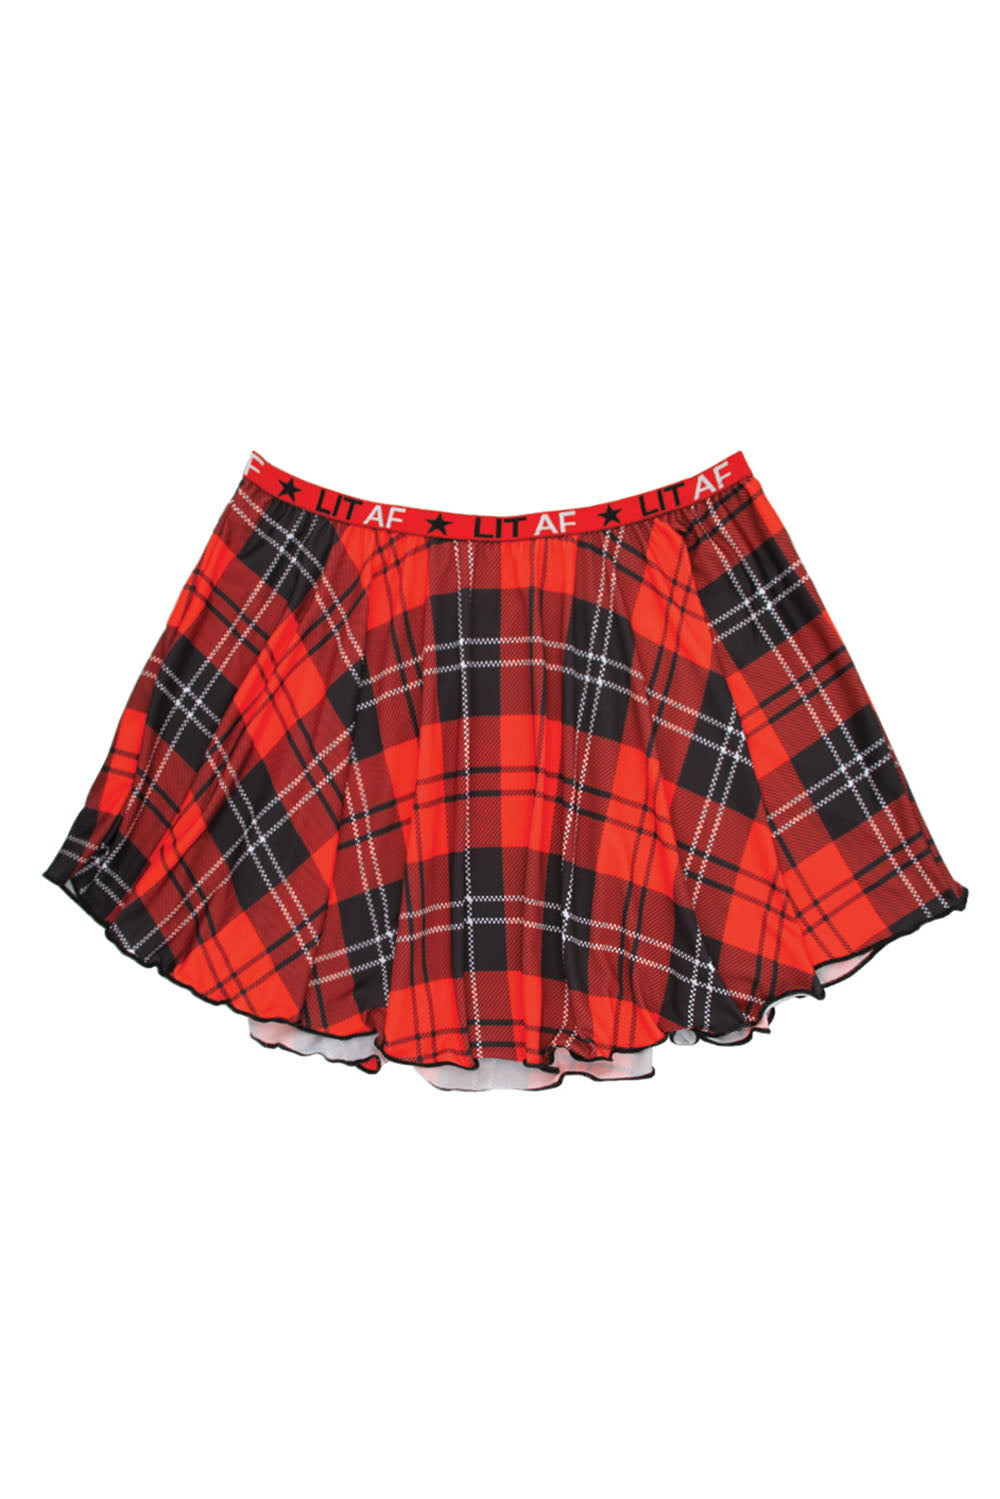 Lit Af Plaid Skirt - Red Plaid - L/xl FL-B-AF803-LXL